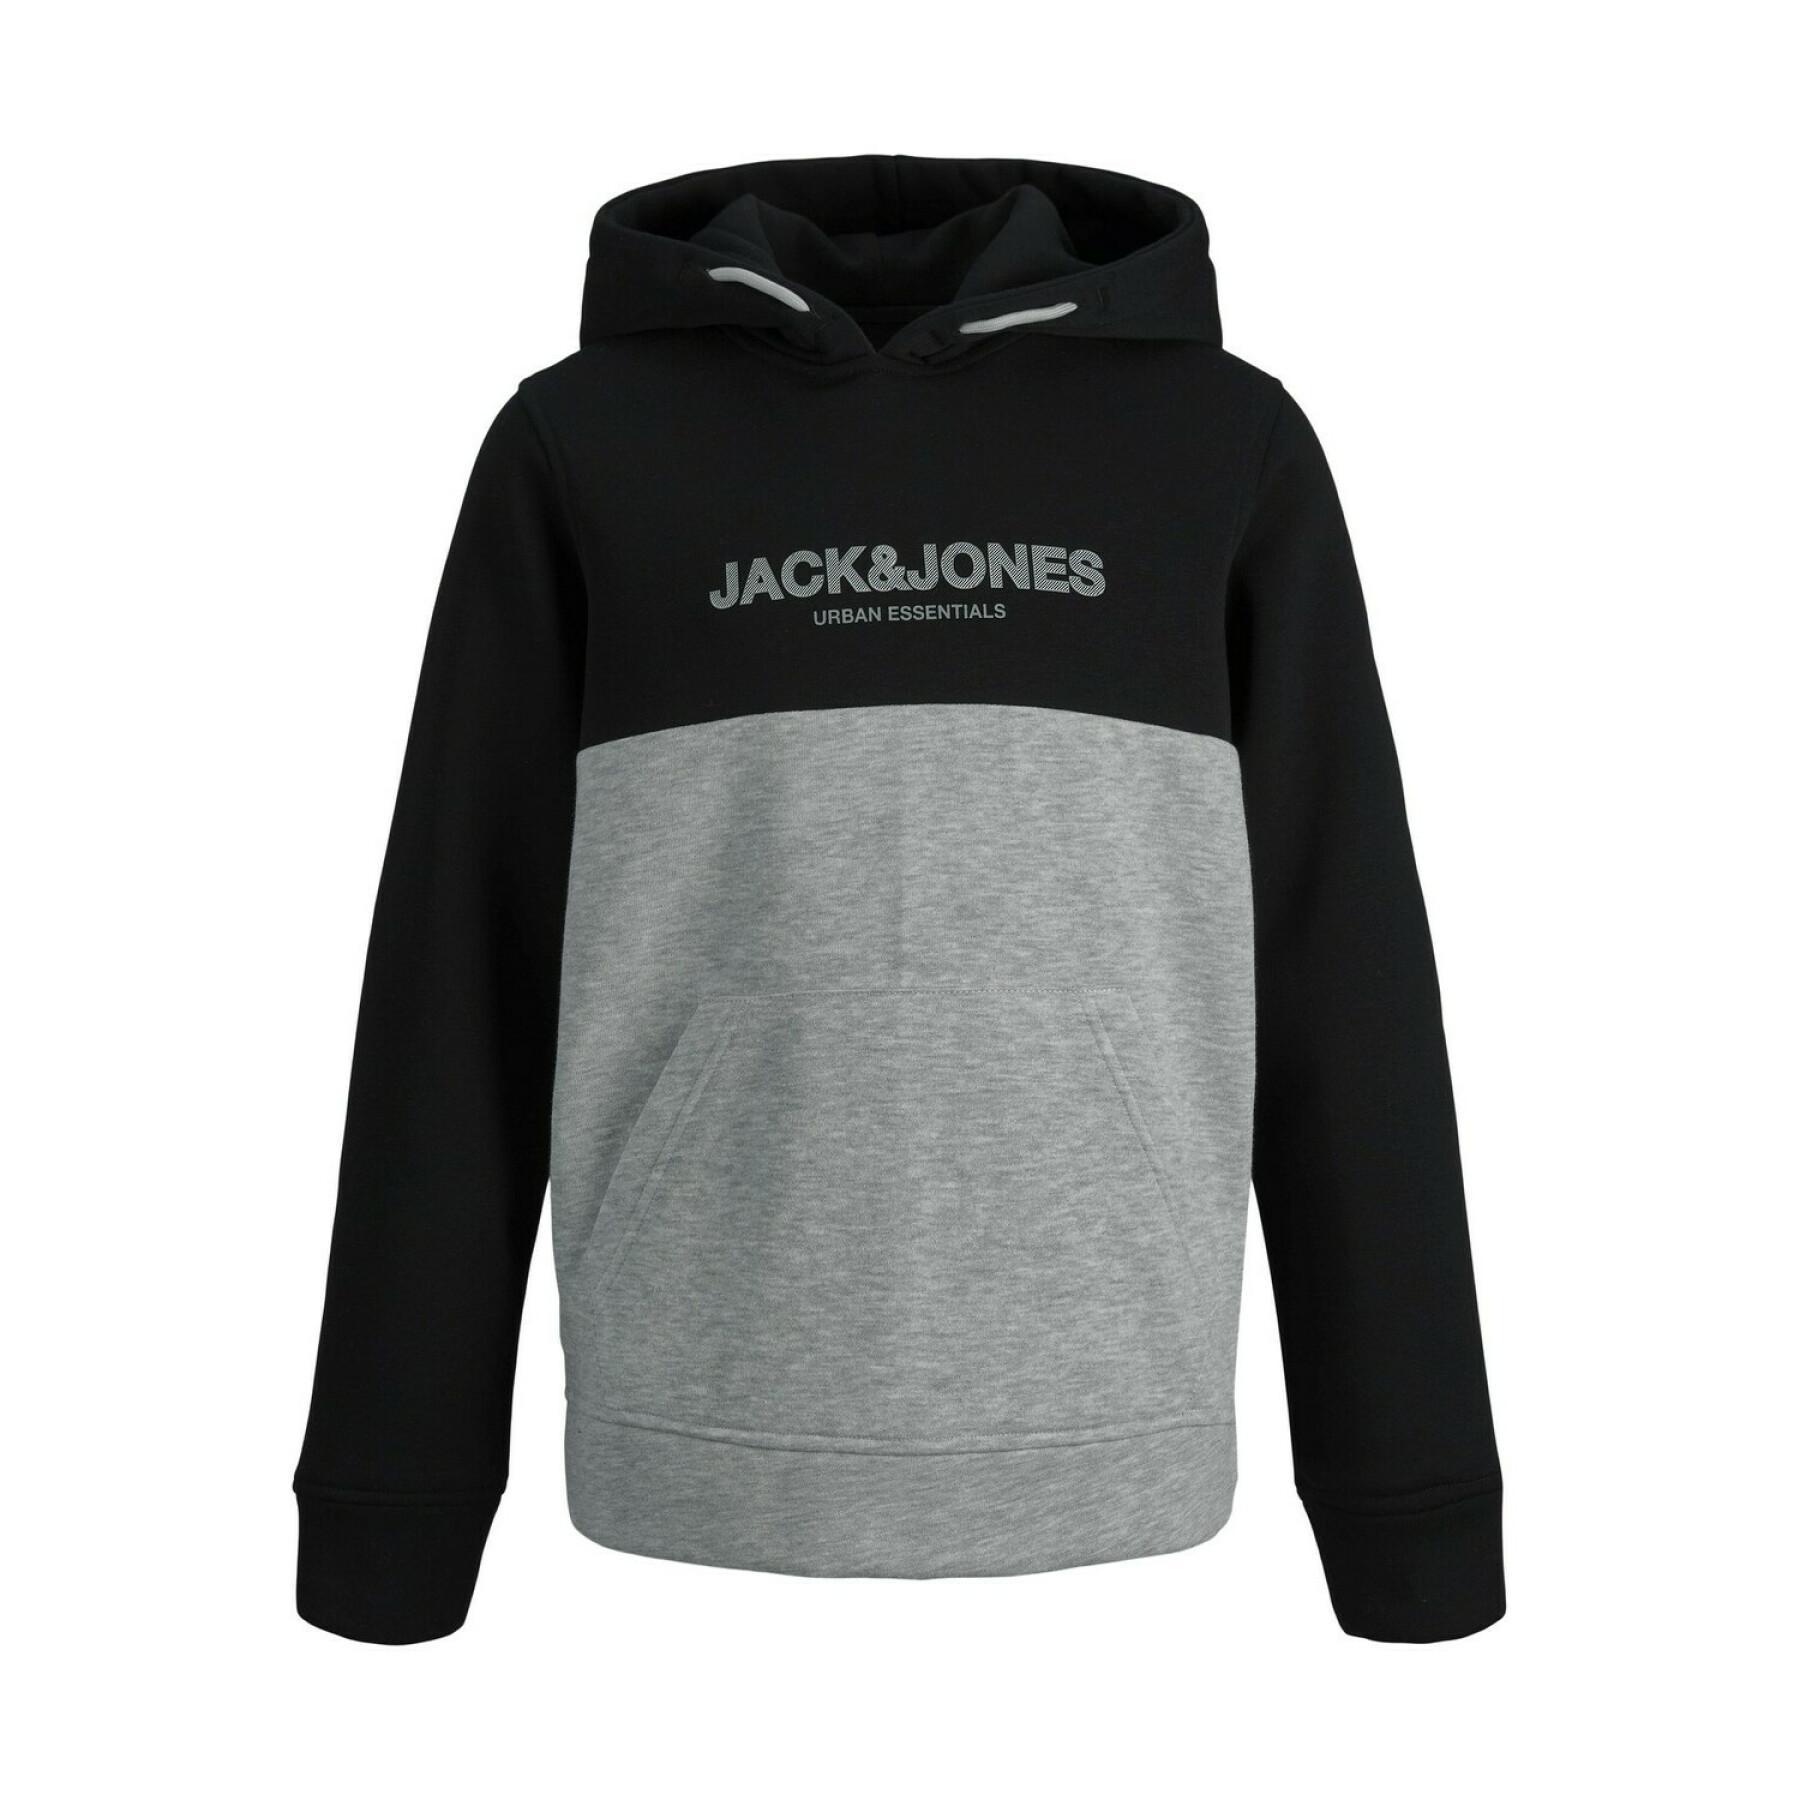 Child hoodie Jack & Jones Urban